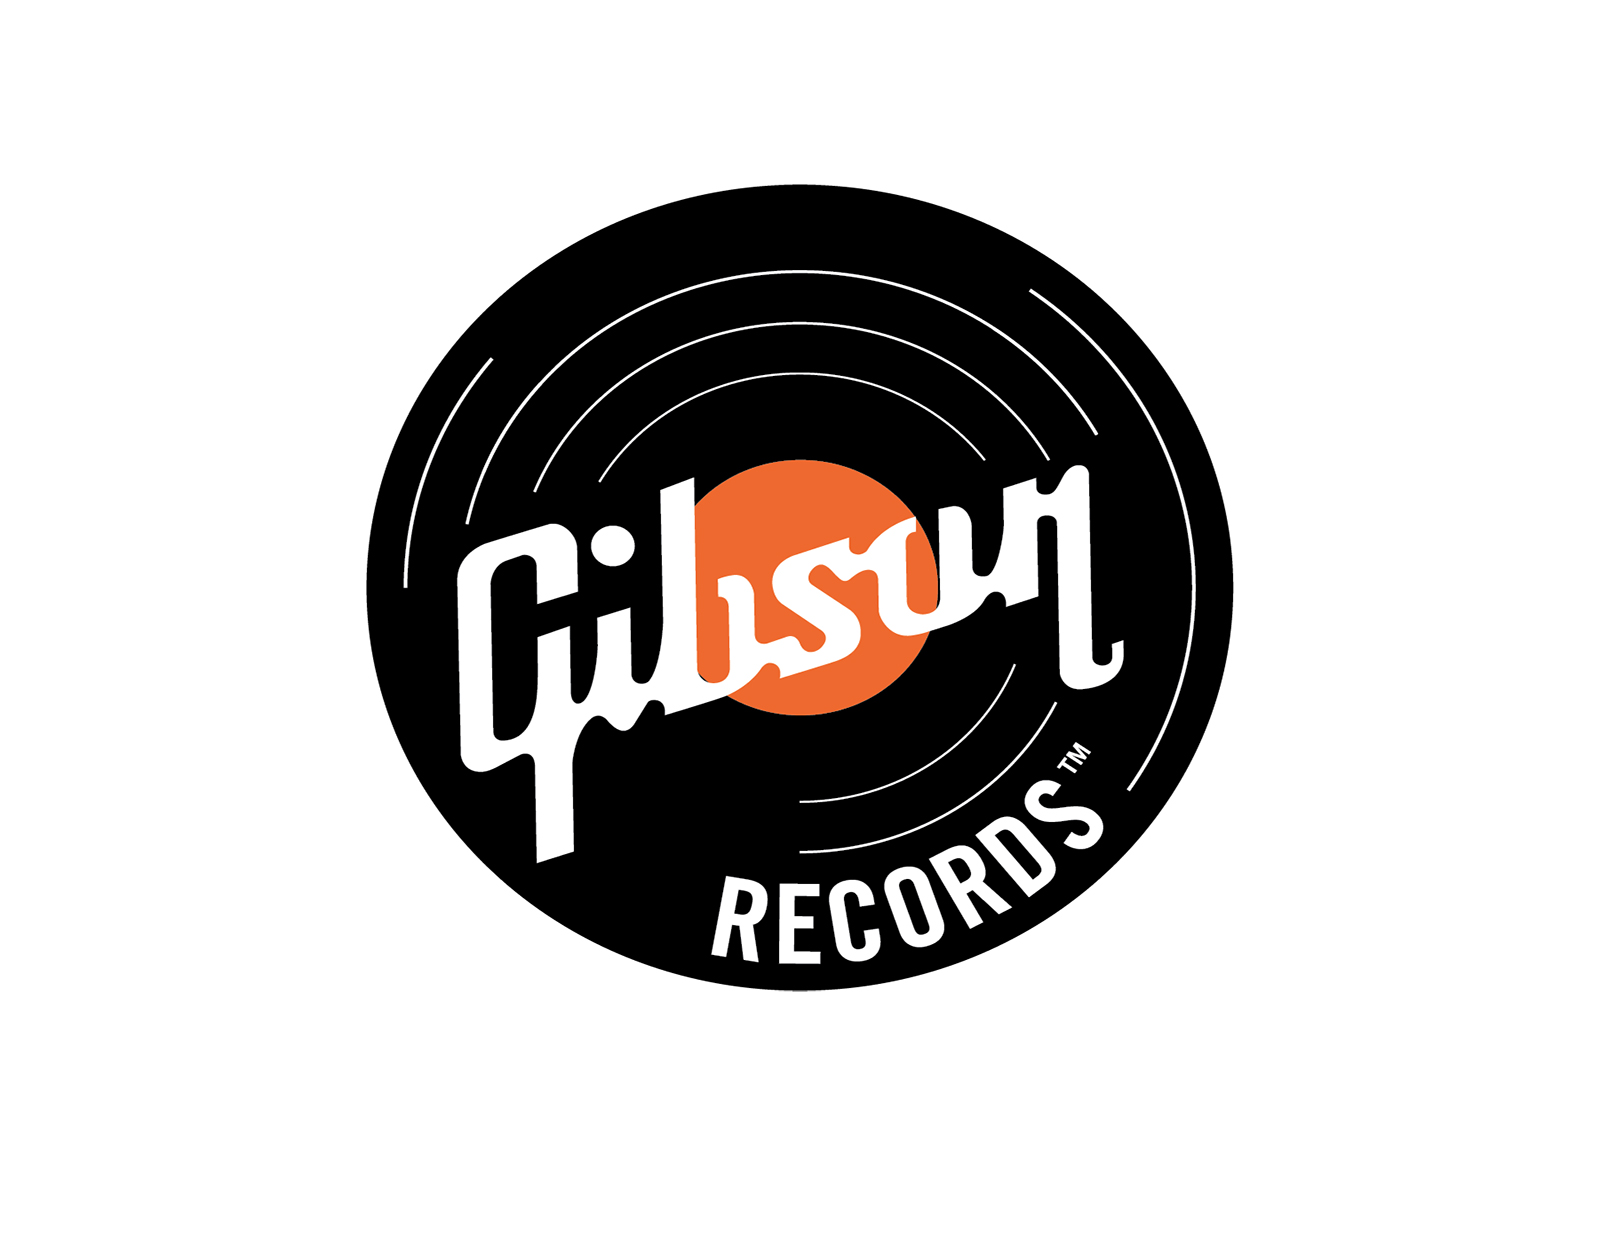 Gibson records releases Slash new album, 4 – t.blog